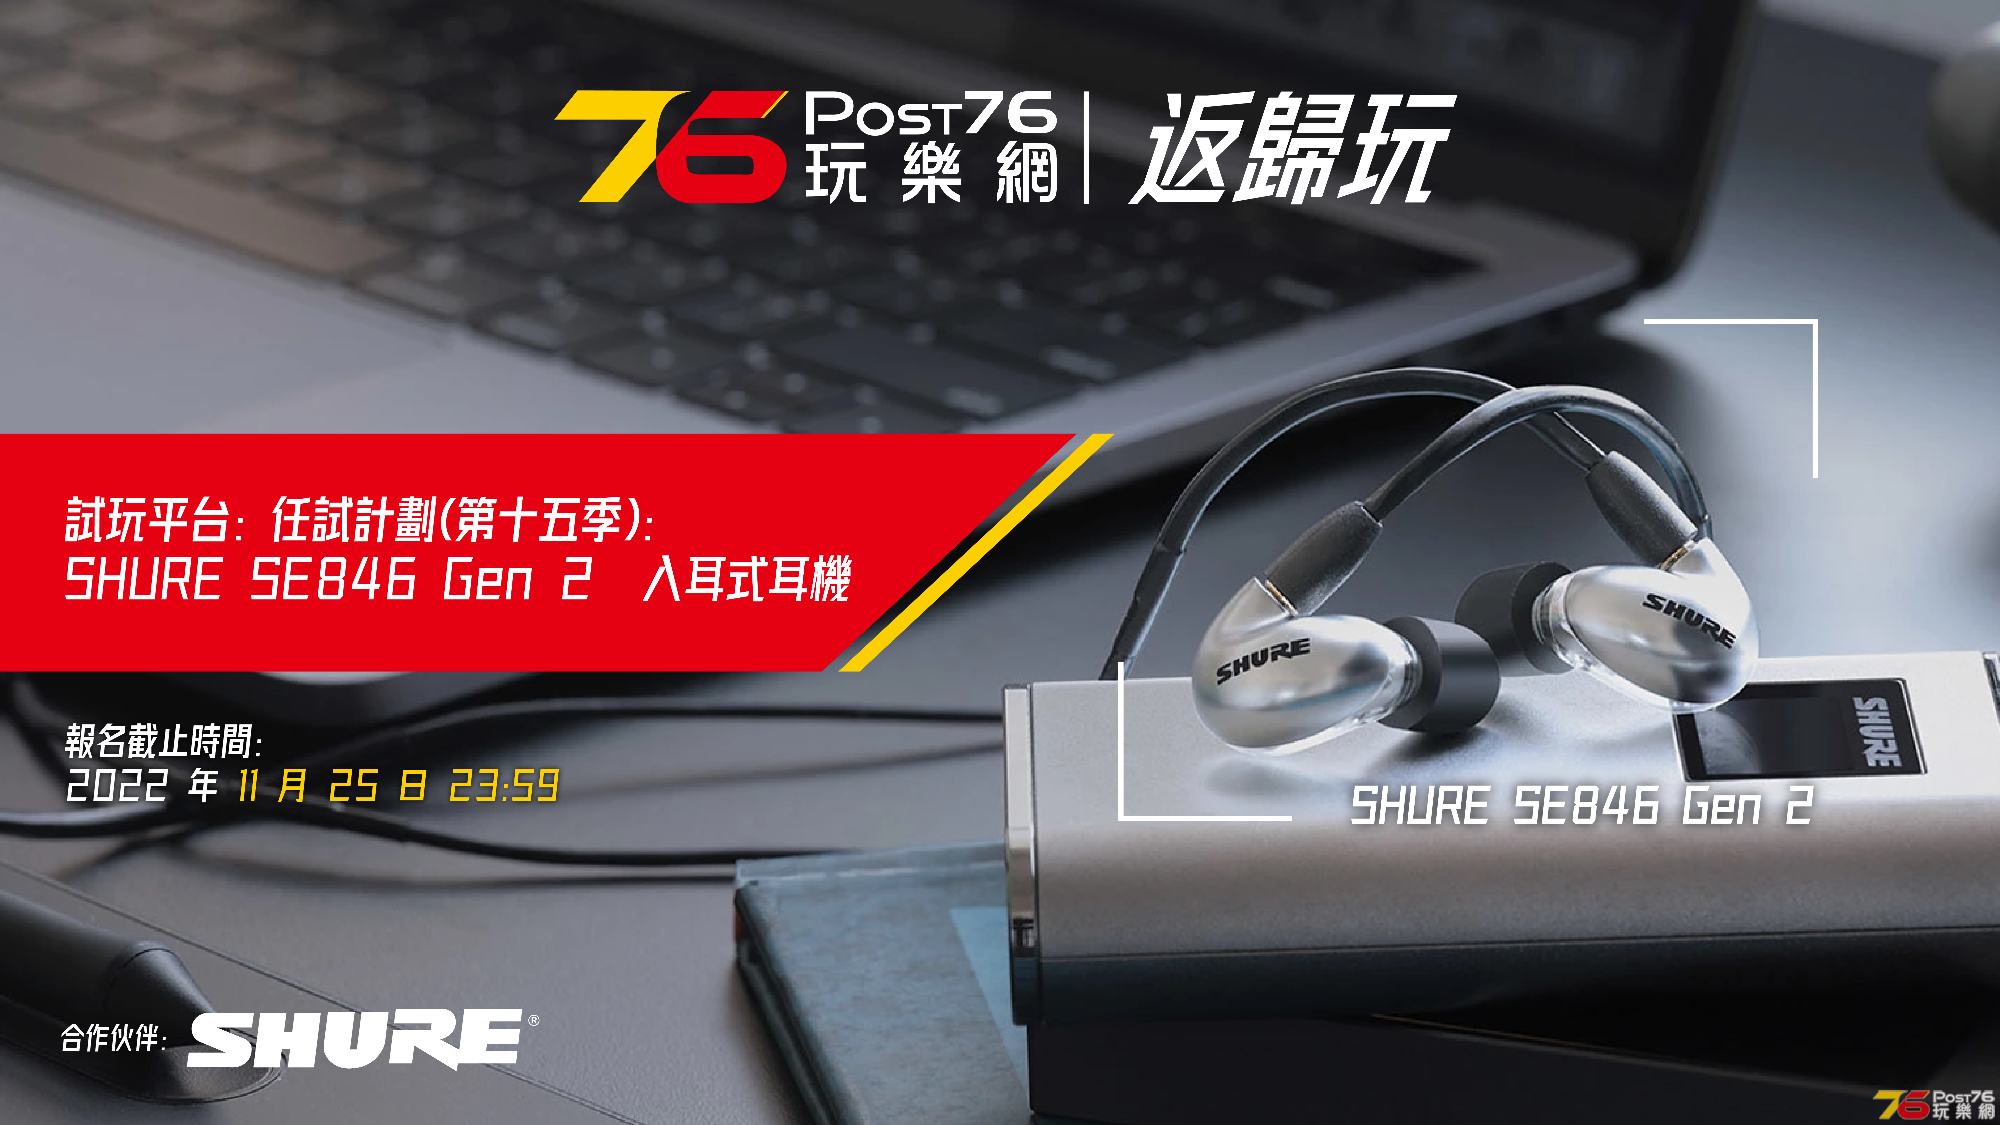 SHURE SE846 Gen 2  入耳式耳機 - 試玩平台- 任試計劃(第十五季)_工作區域 1.png.png